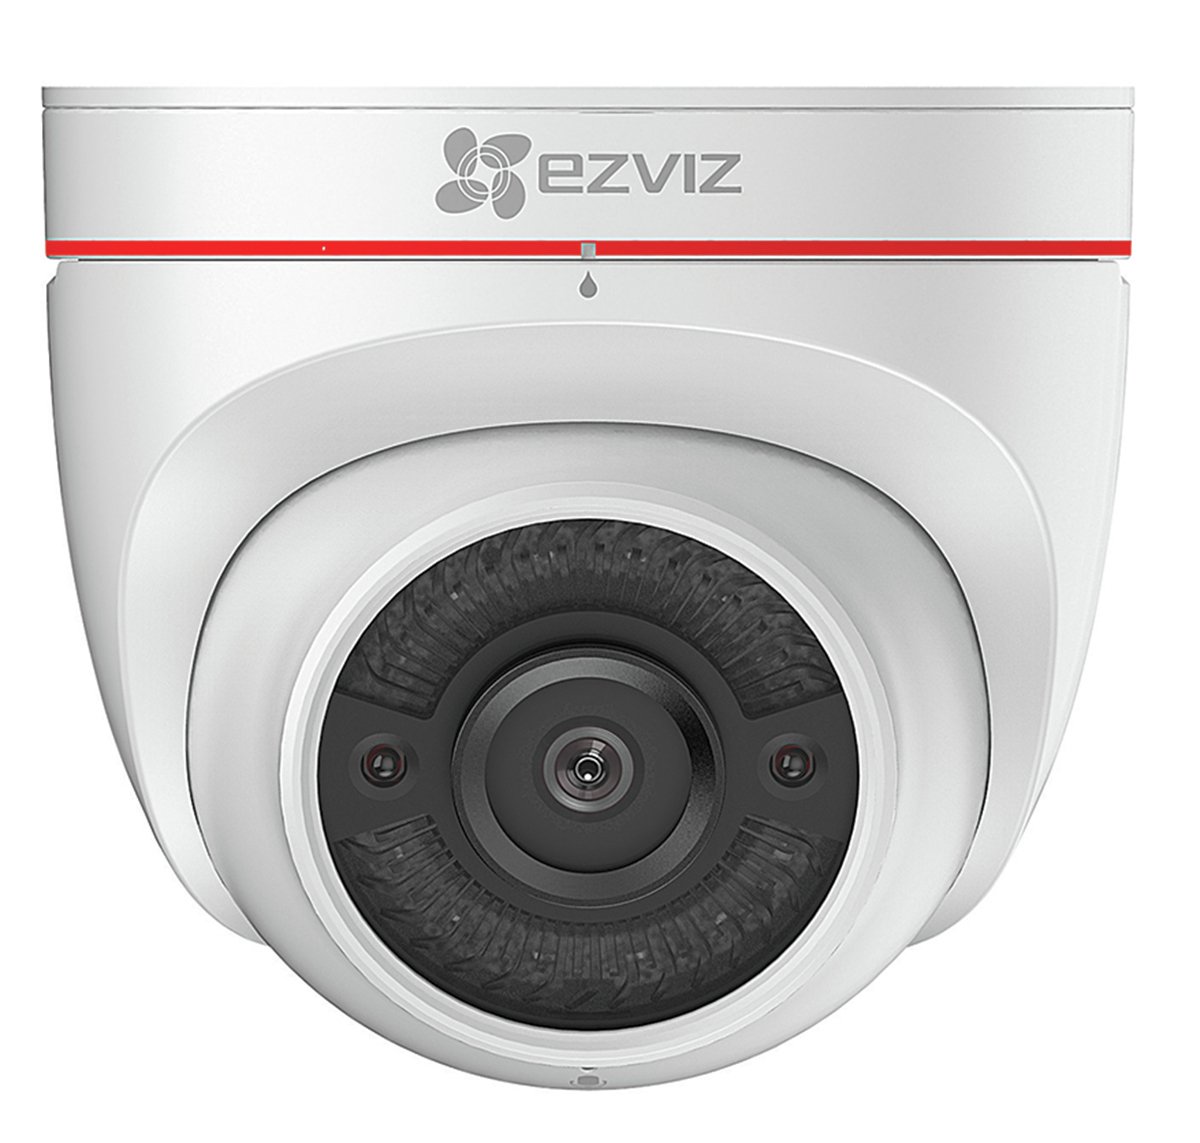 EZVIZ C4W Outdoor Camera with Siren and Strobe Light Review